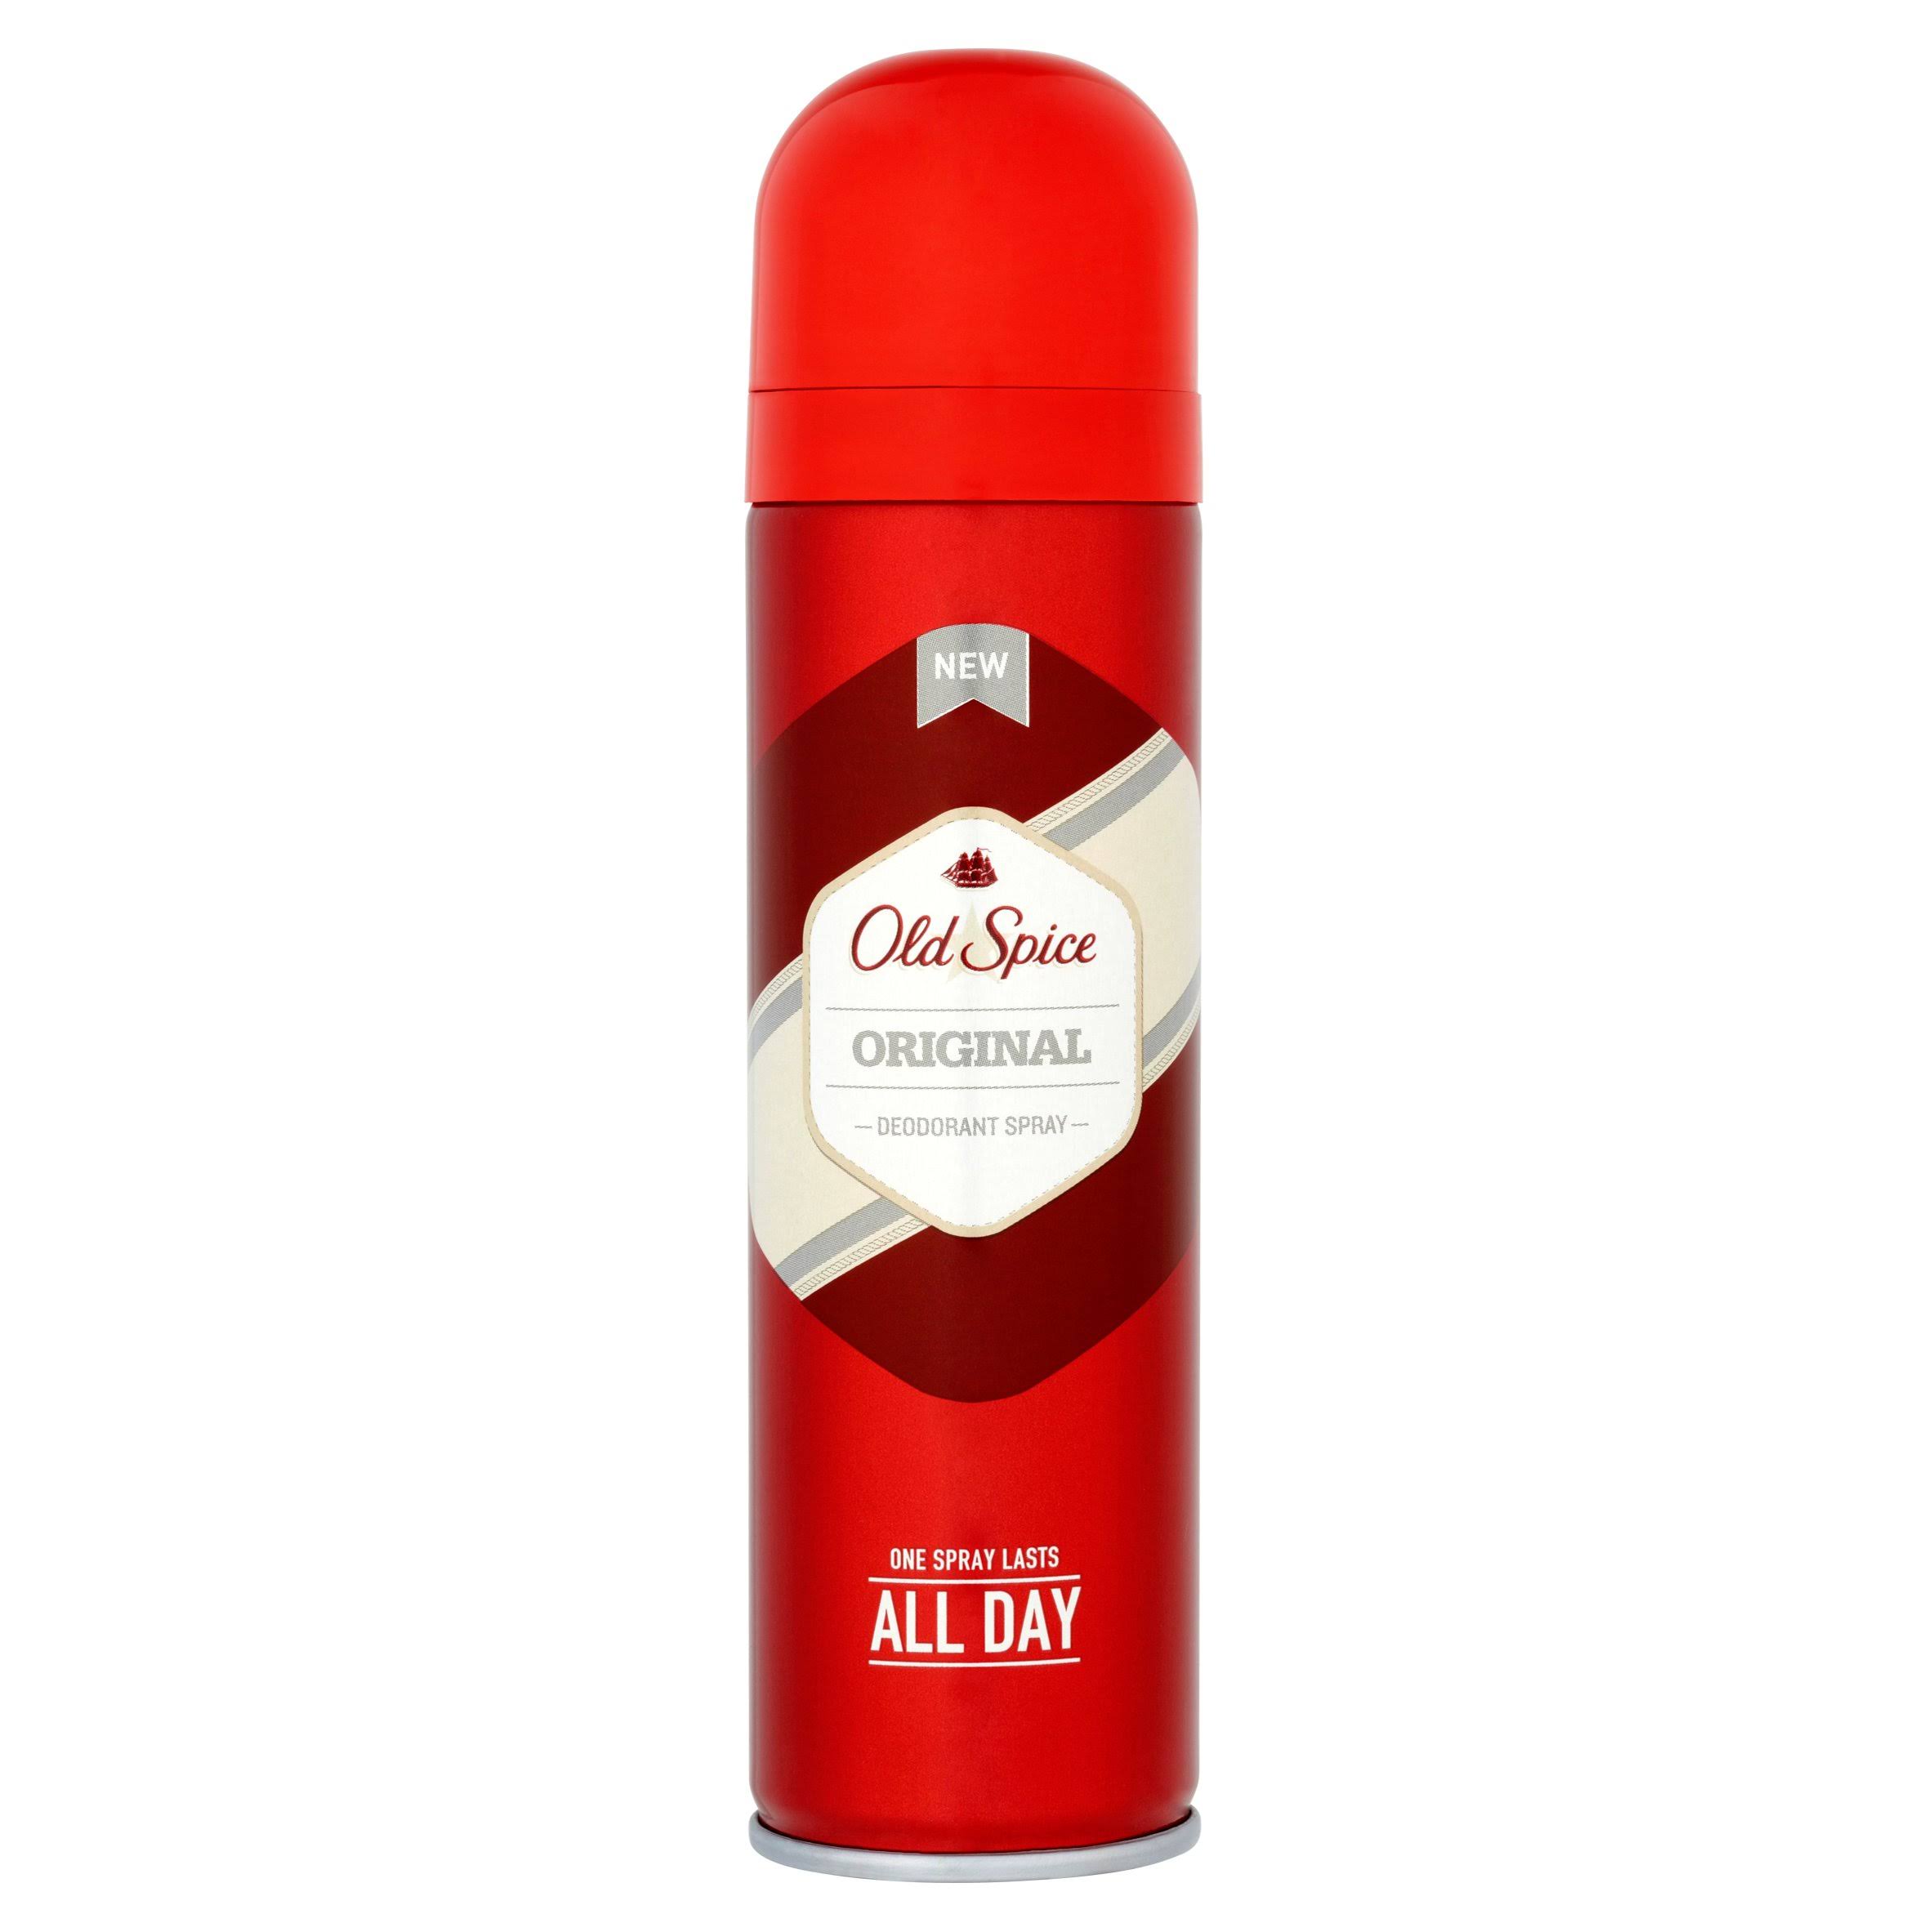 Old Spice Original Deodorant Body Spray - 150ml